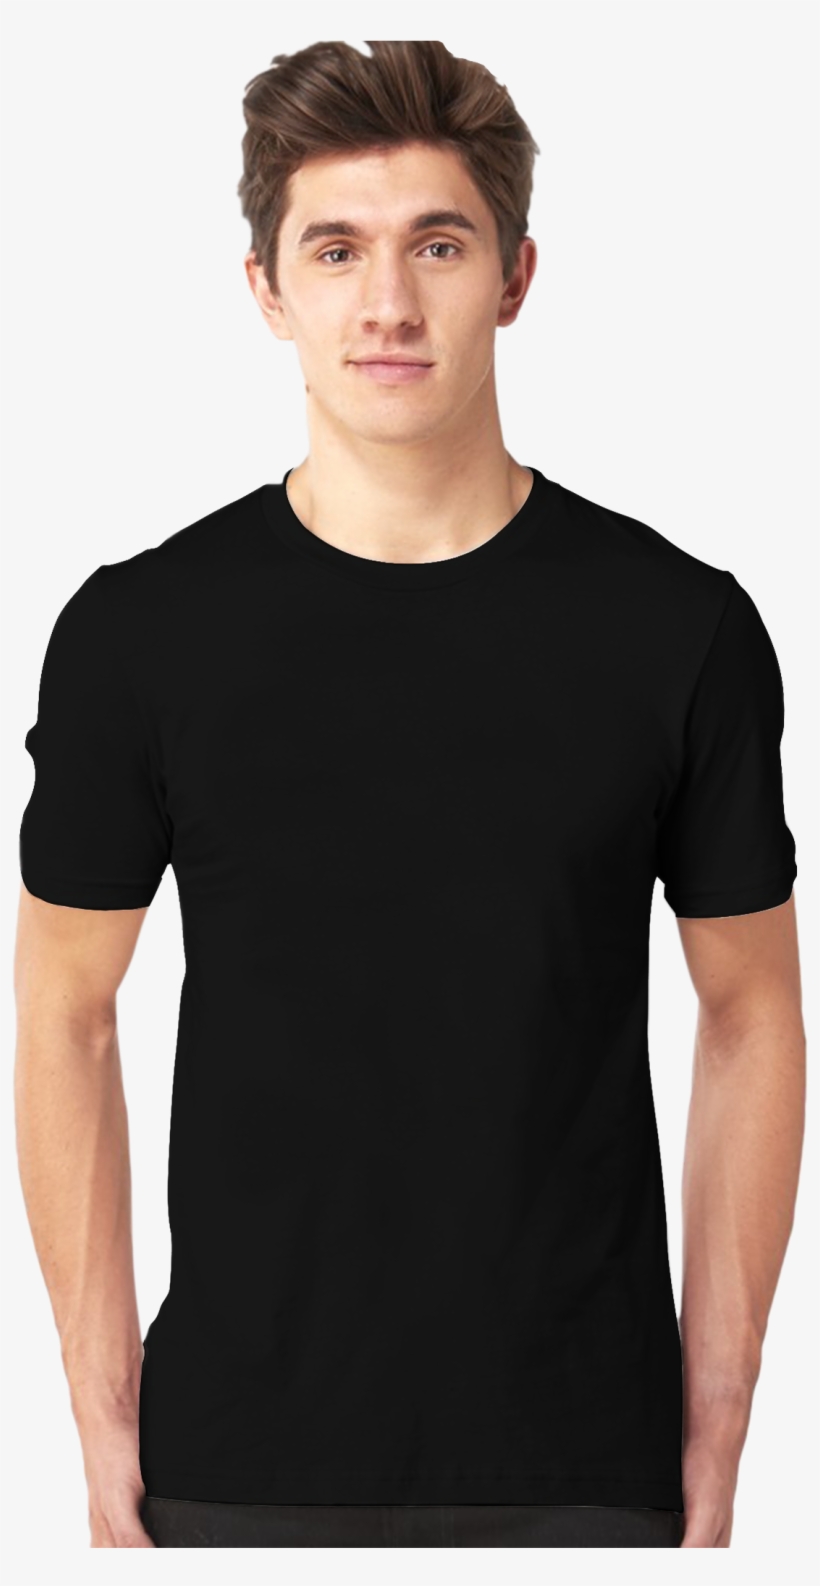 2 D - Synecdoche New York T Shirt, transparent png #1400362